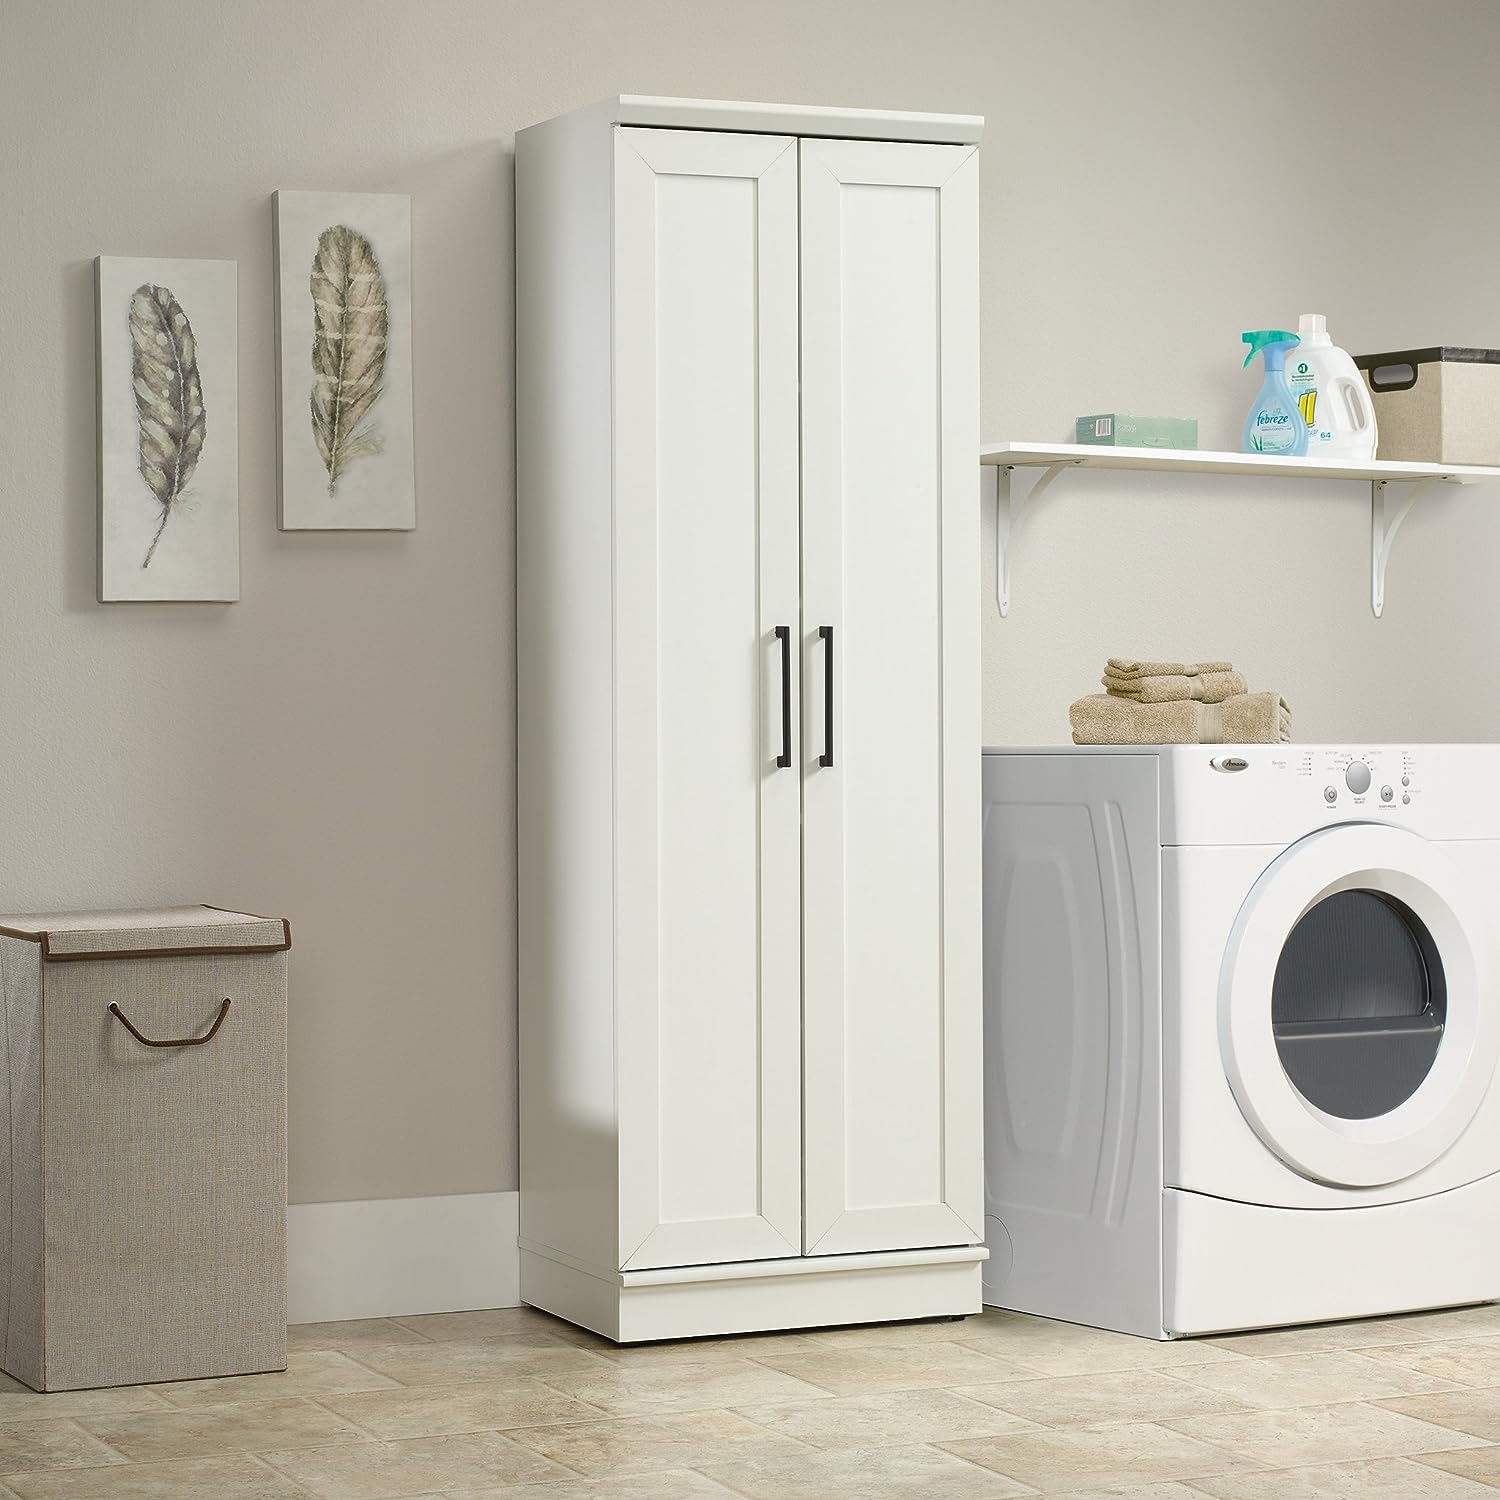 Sauder Home Plus Storage Cabinet, Soft White finish - $145